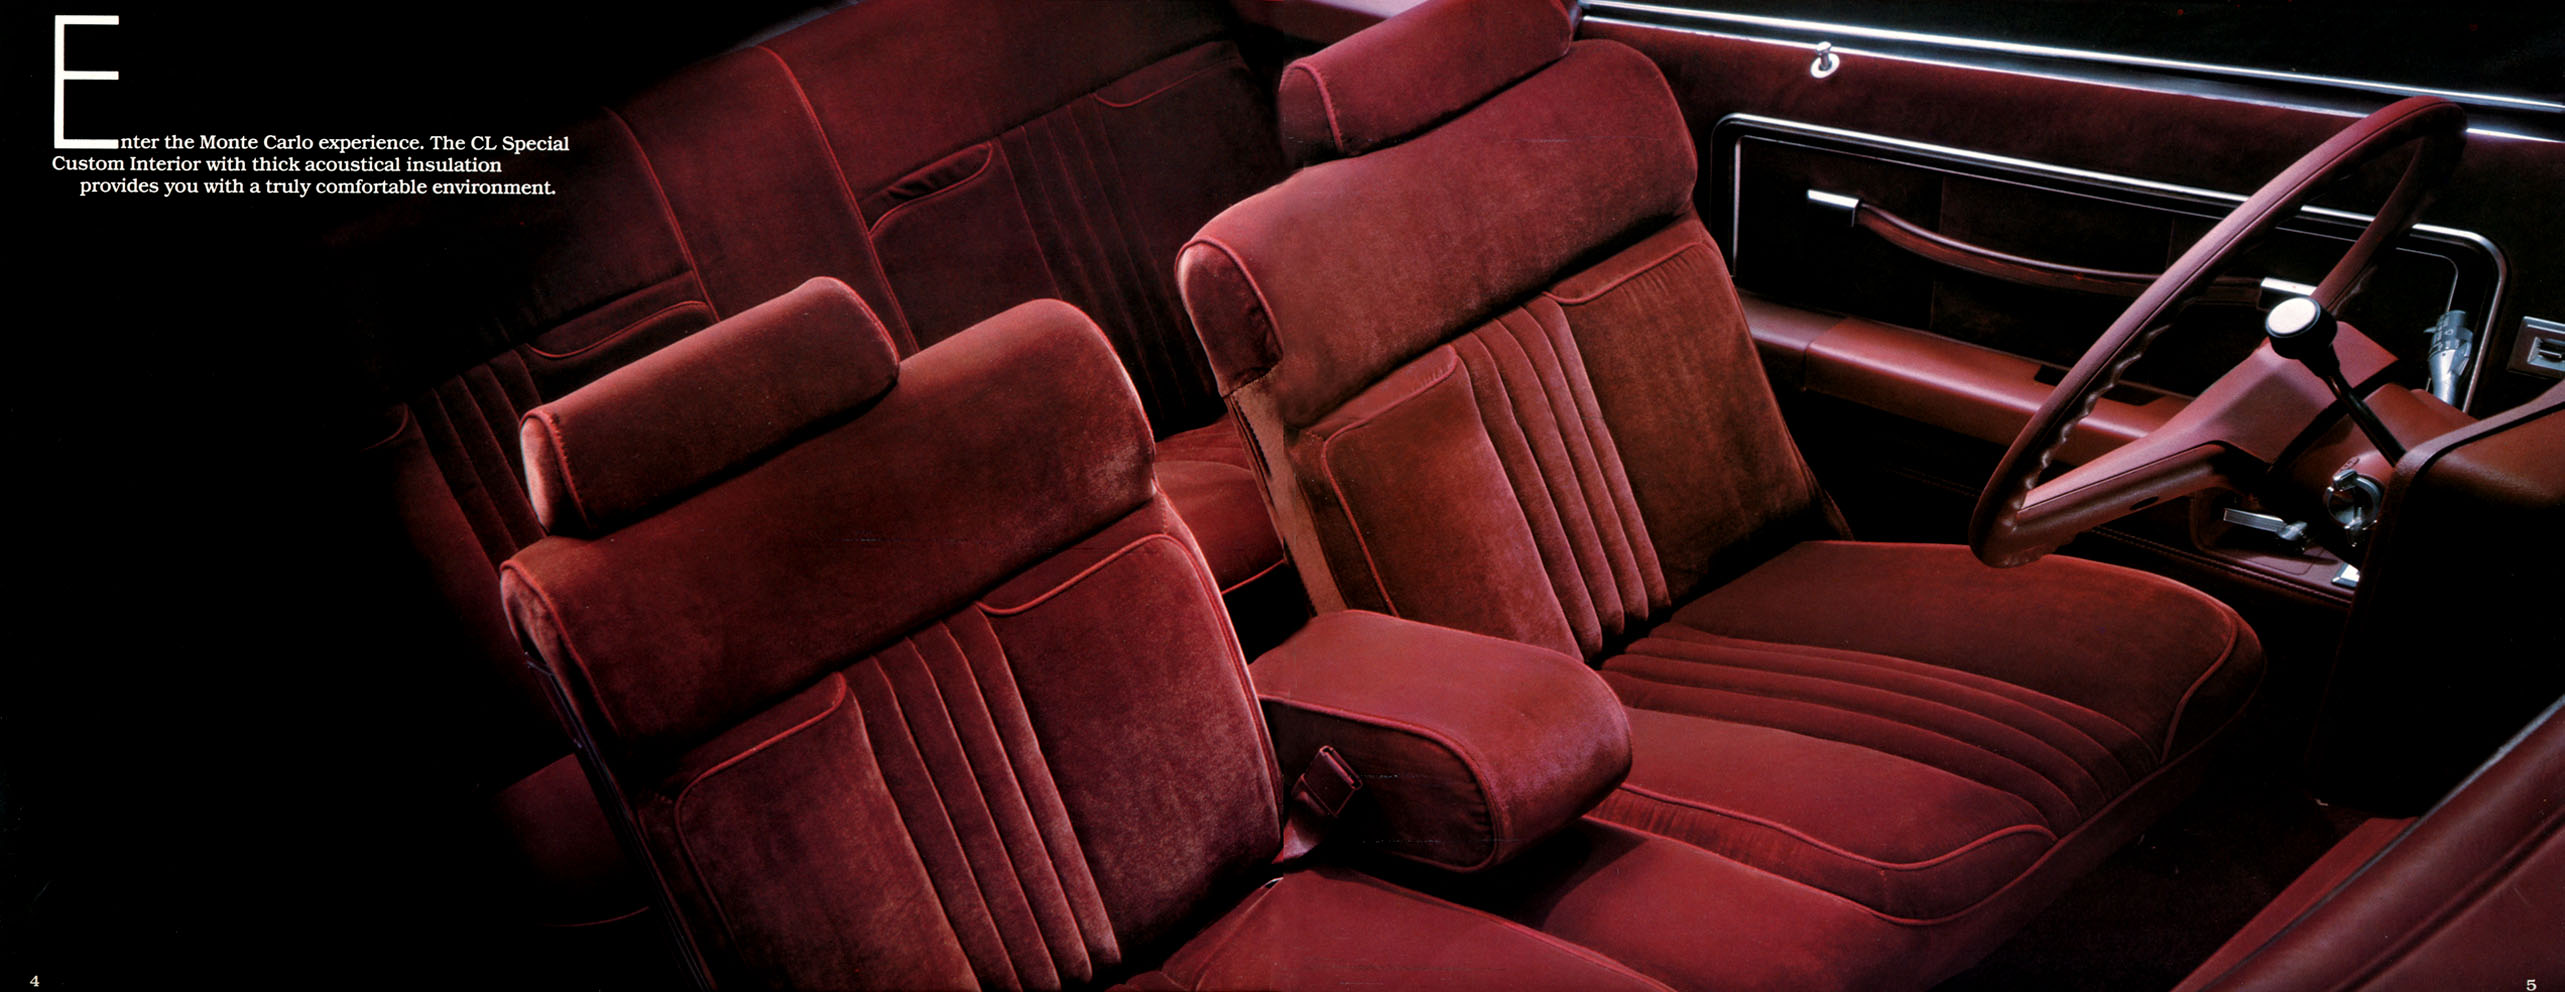 1983_Chevrolet_Monte_Carlo-03